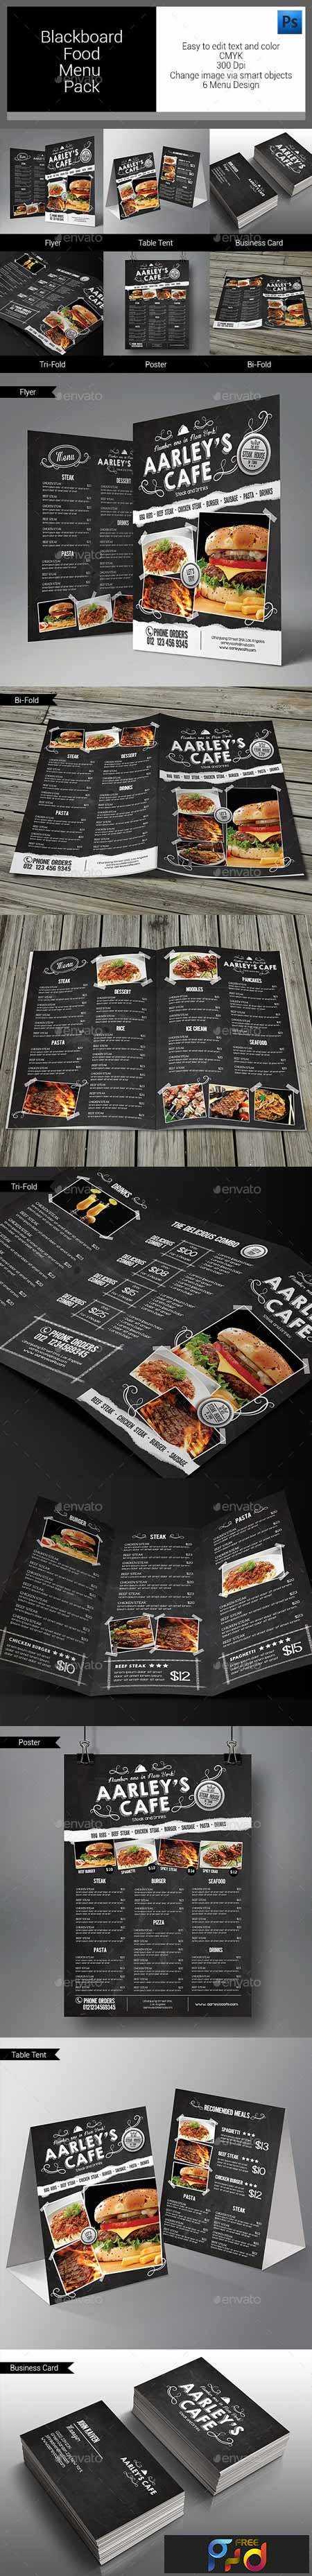 freepsdvn-com_1429239356_blackboard-food-menu-bundle-11020267